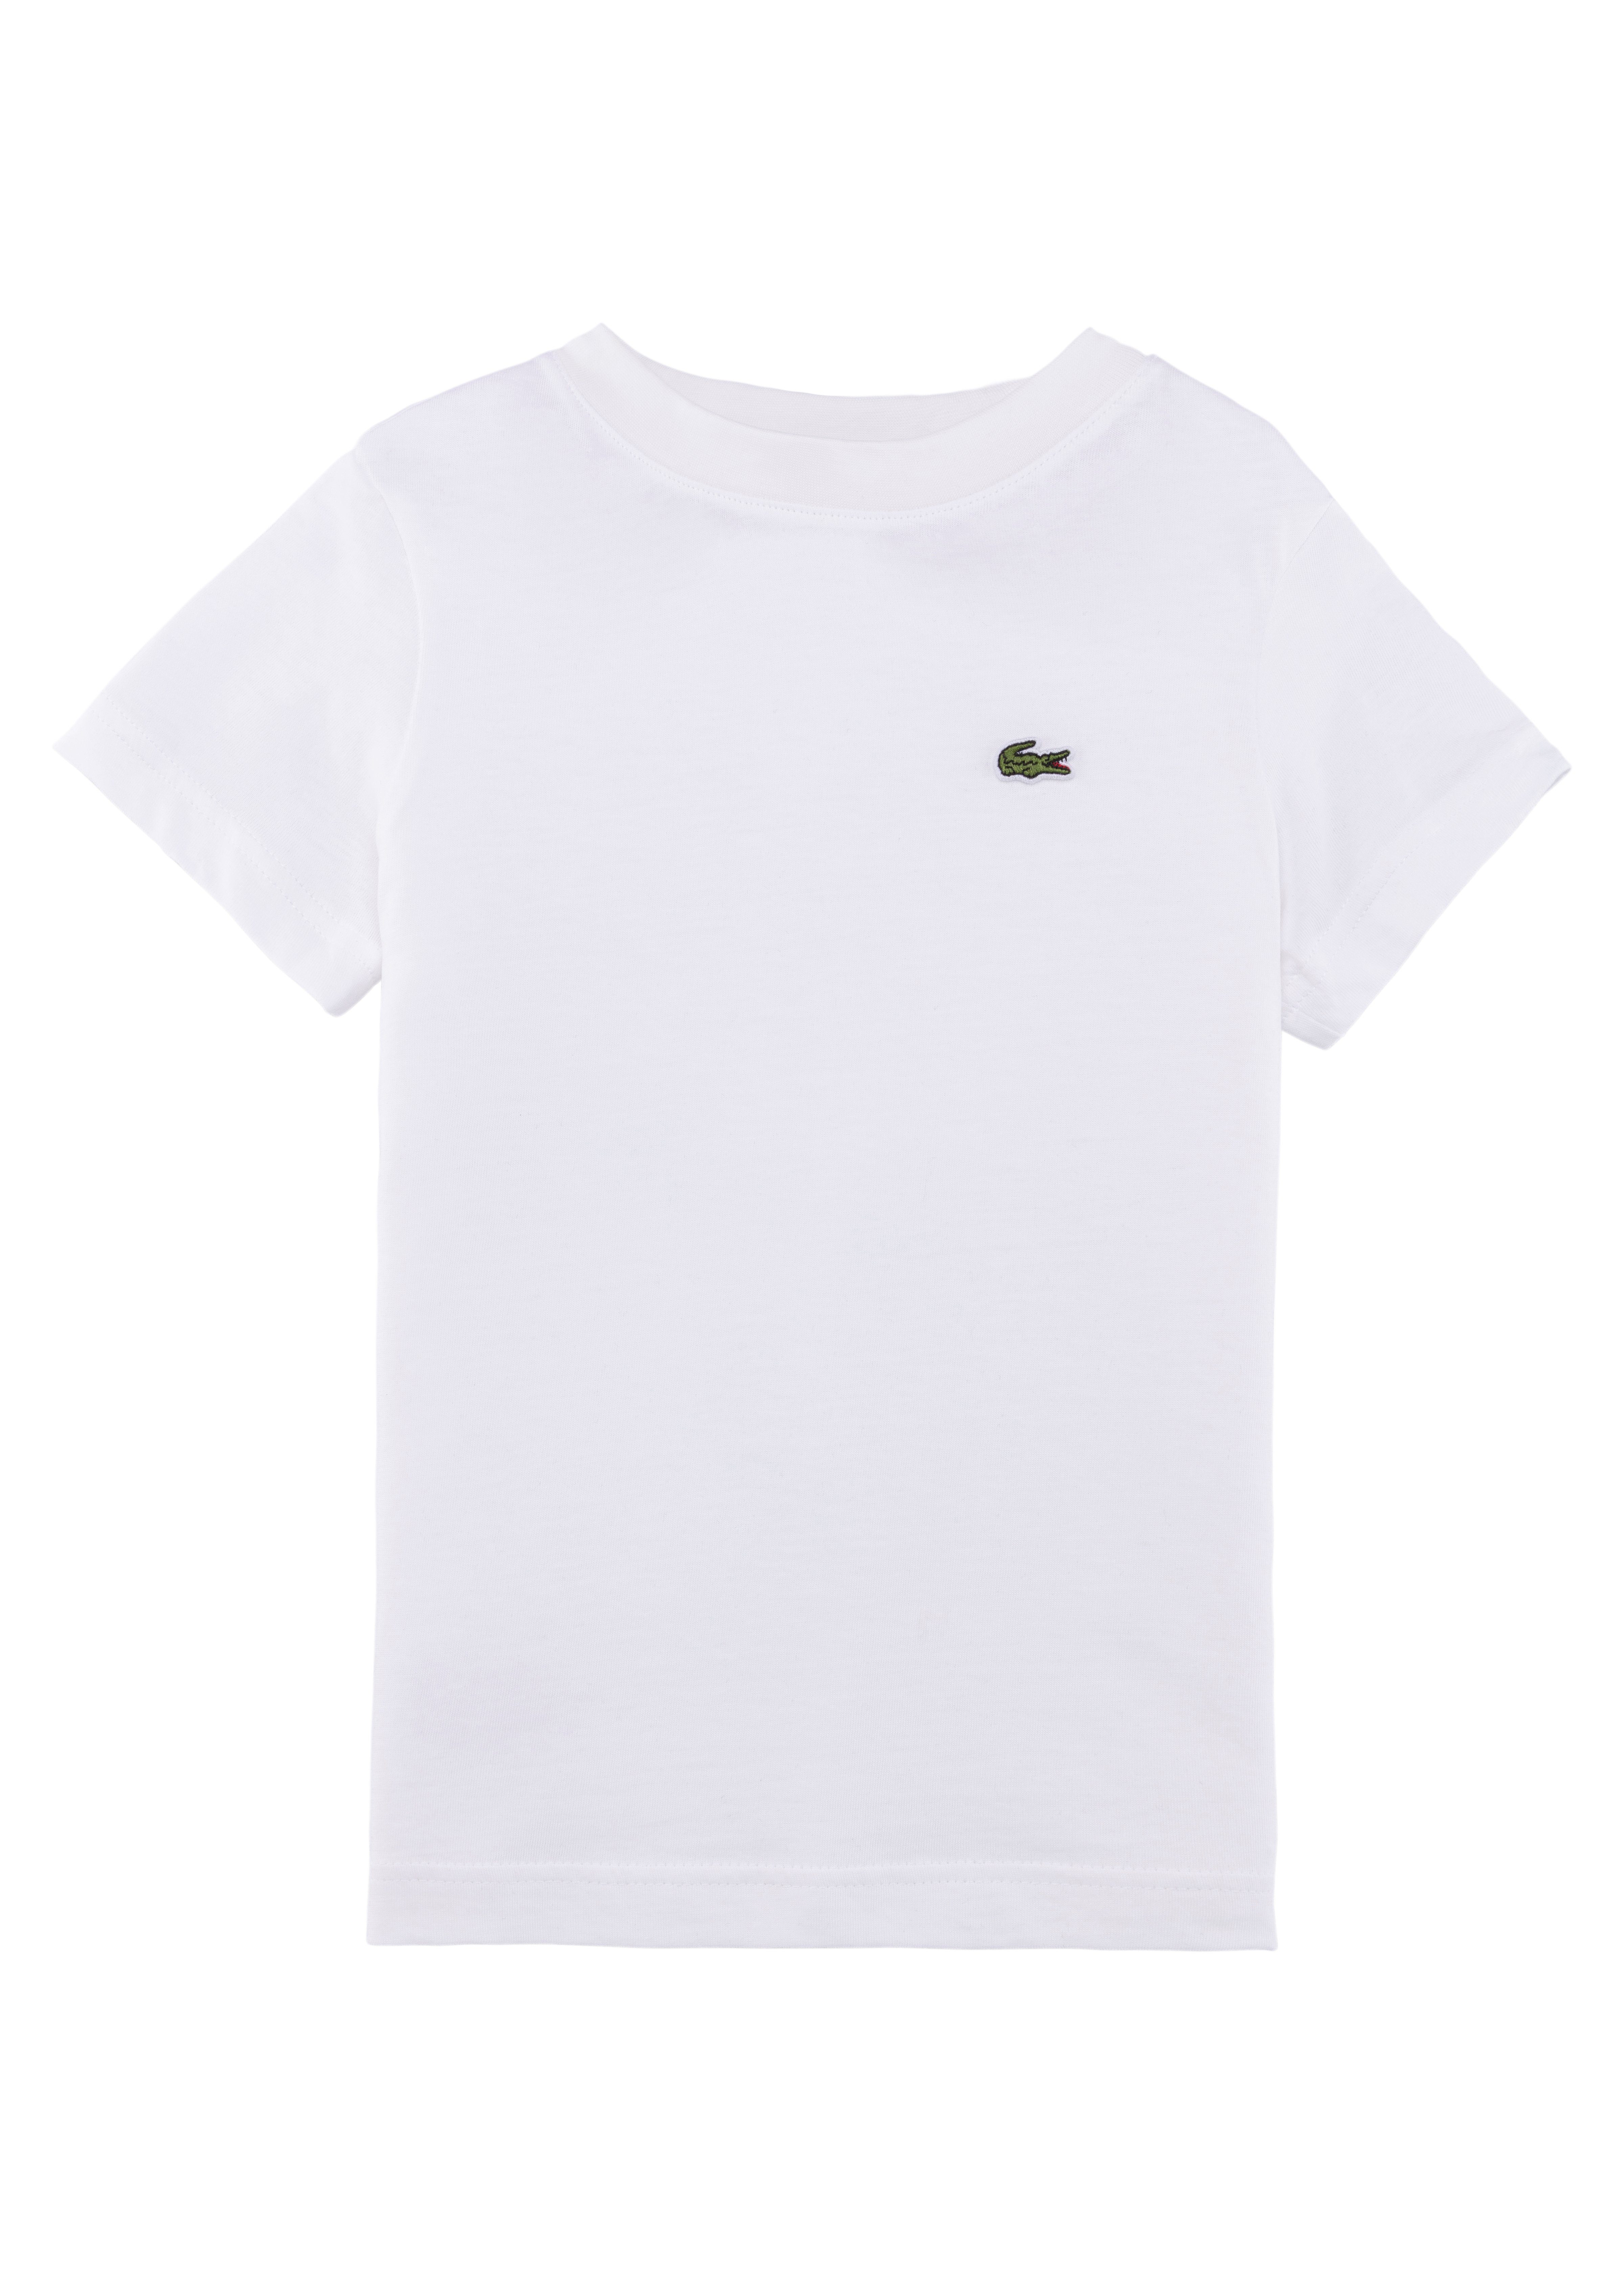 Brusthöhe Lacoste-Krokodil T-Shirt WHITE Lacoste mit auf